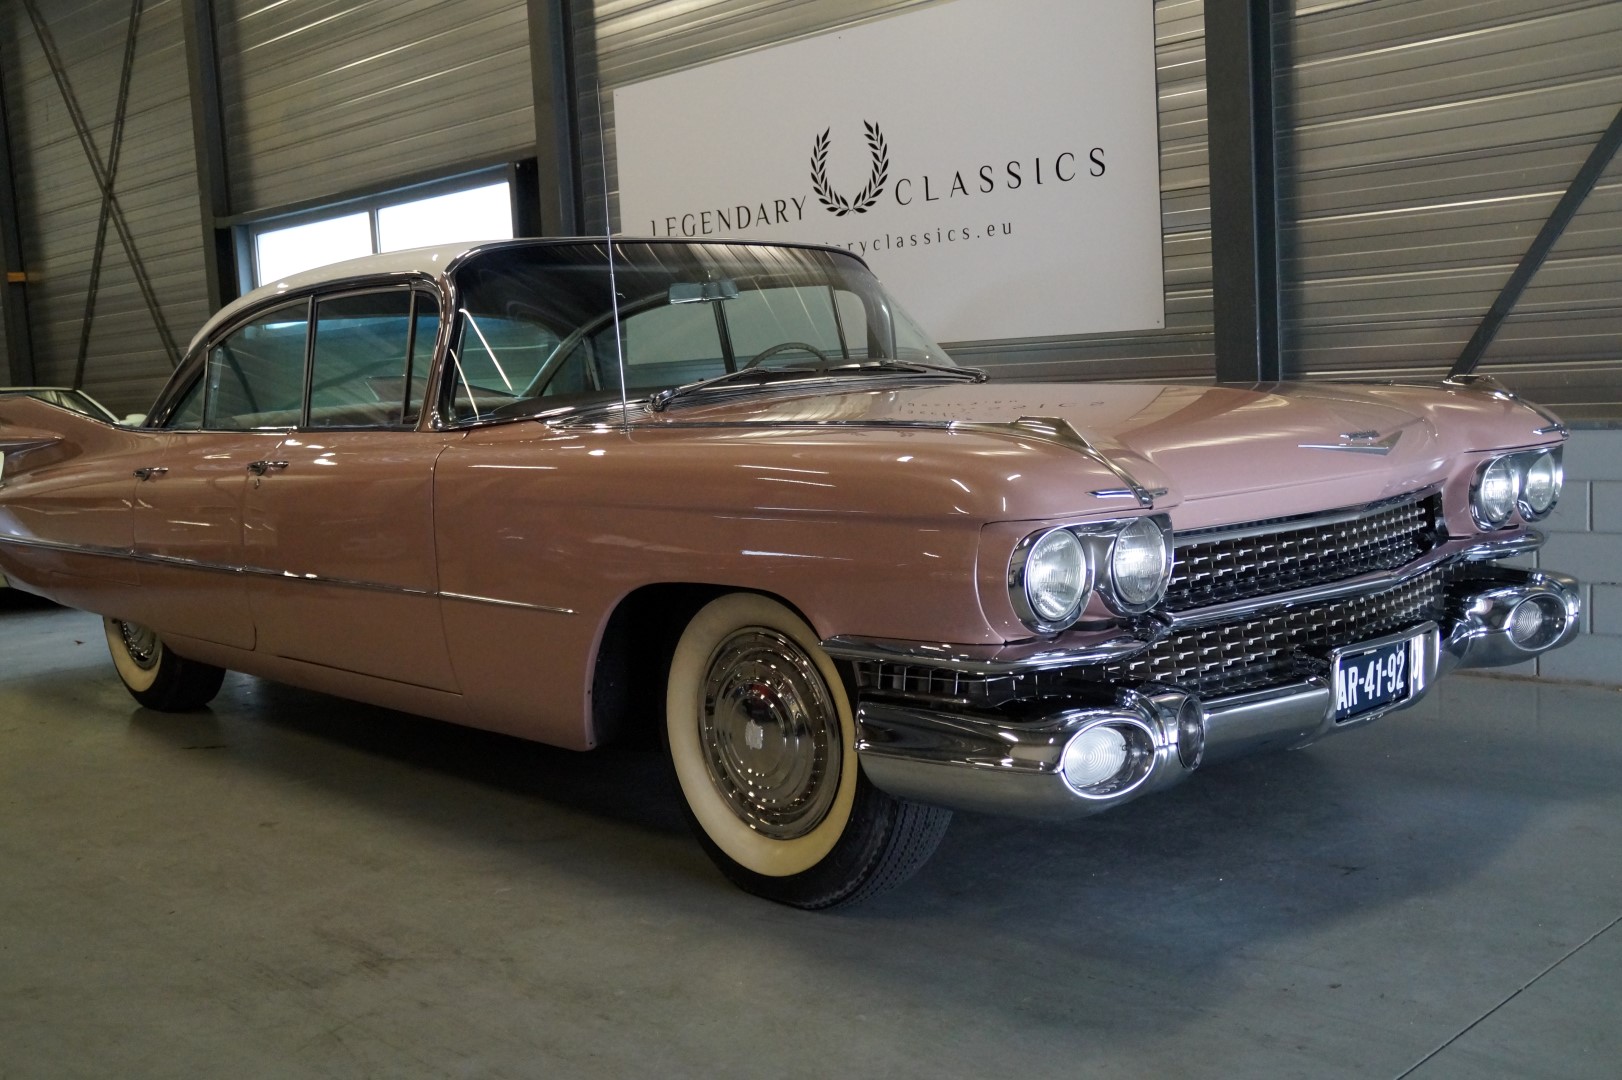 Buy this Cadillac Sedan de ville   at Legendary Classics